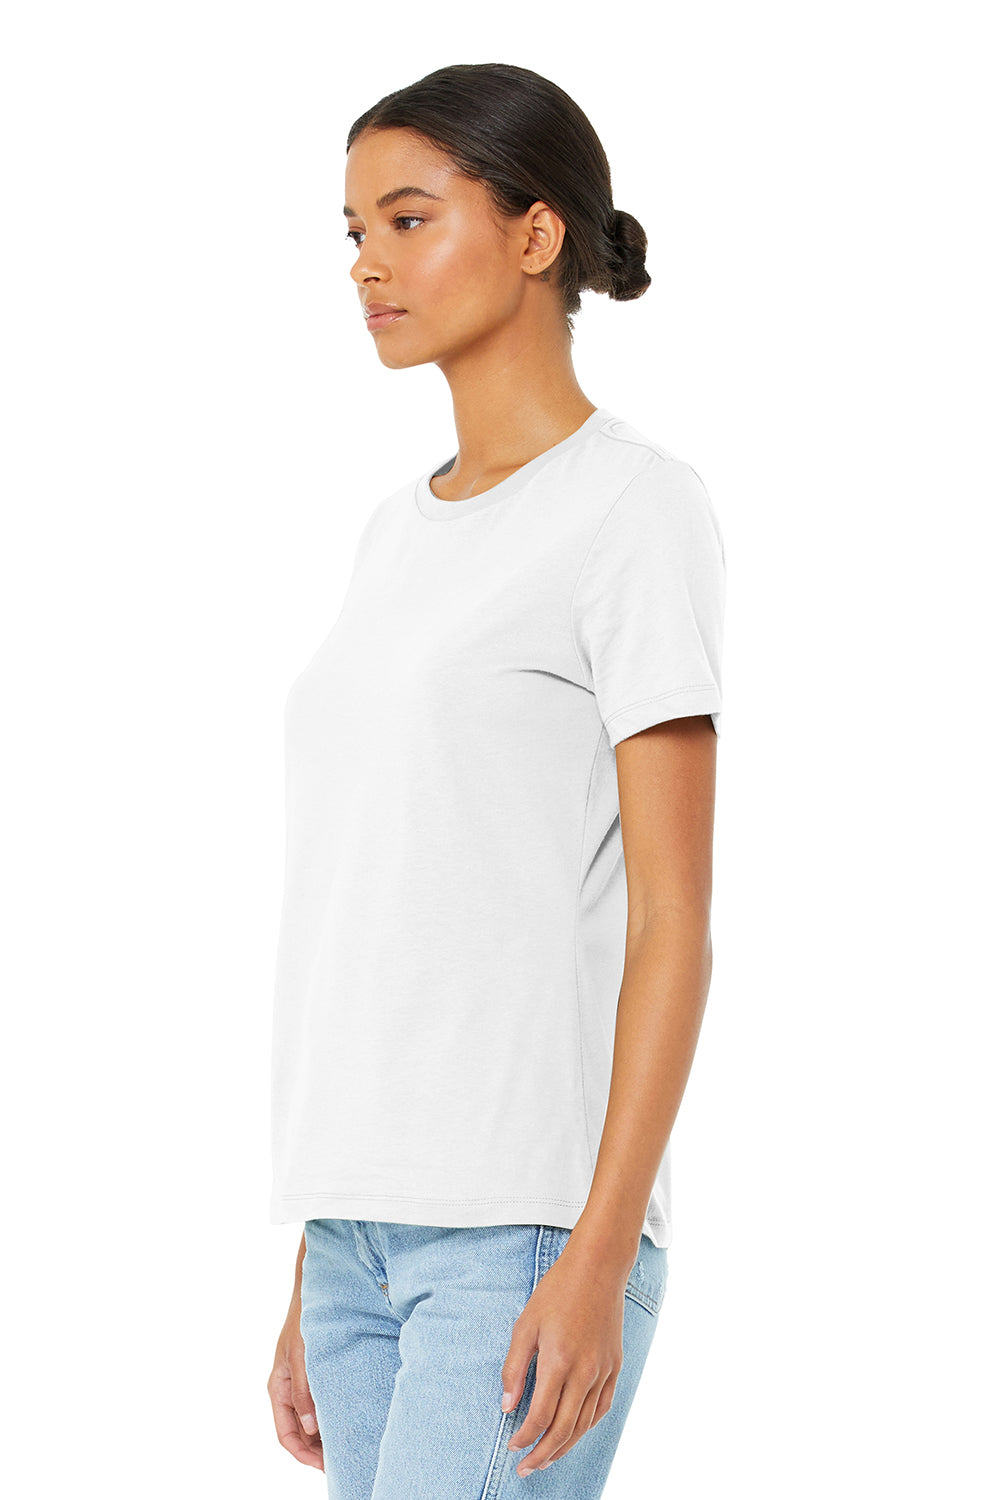 Bella + Canvas BC6400/B6400/6400 Womens Relaxed Jersey Short Sleeve Crewneck T-Shirt White Model 3Q